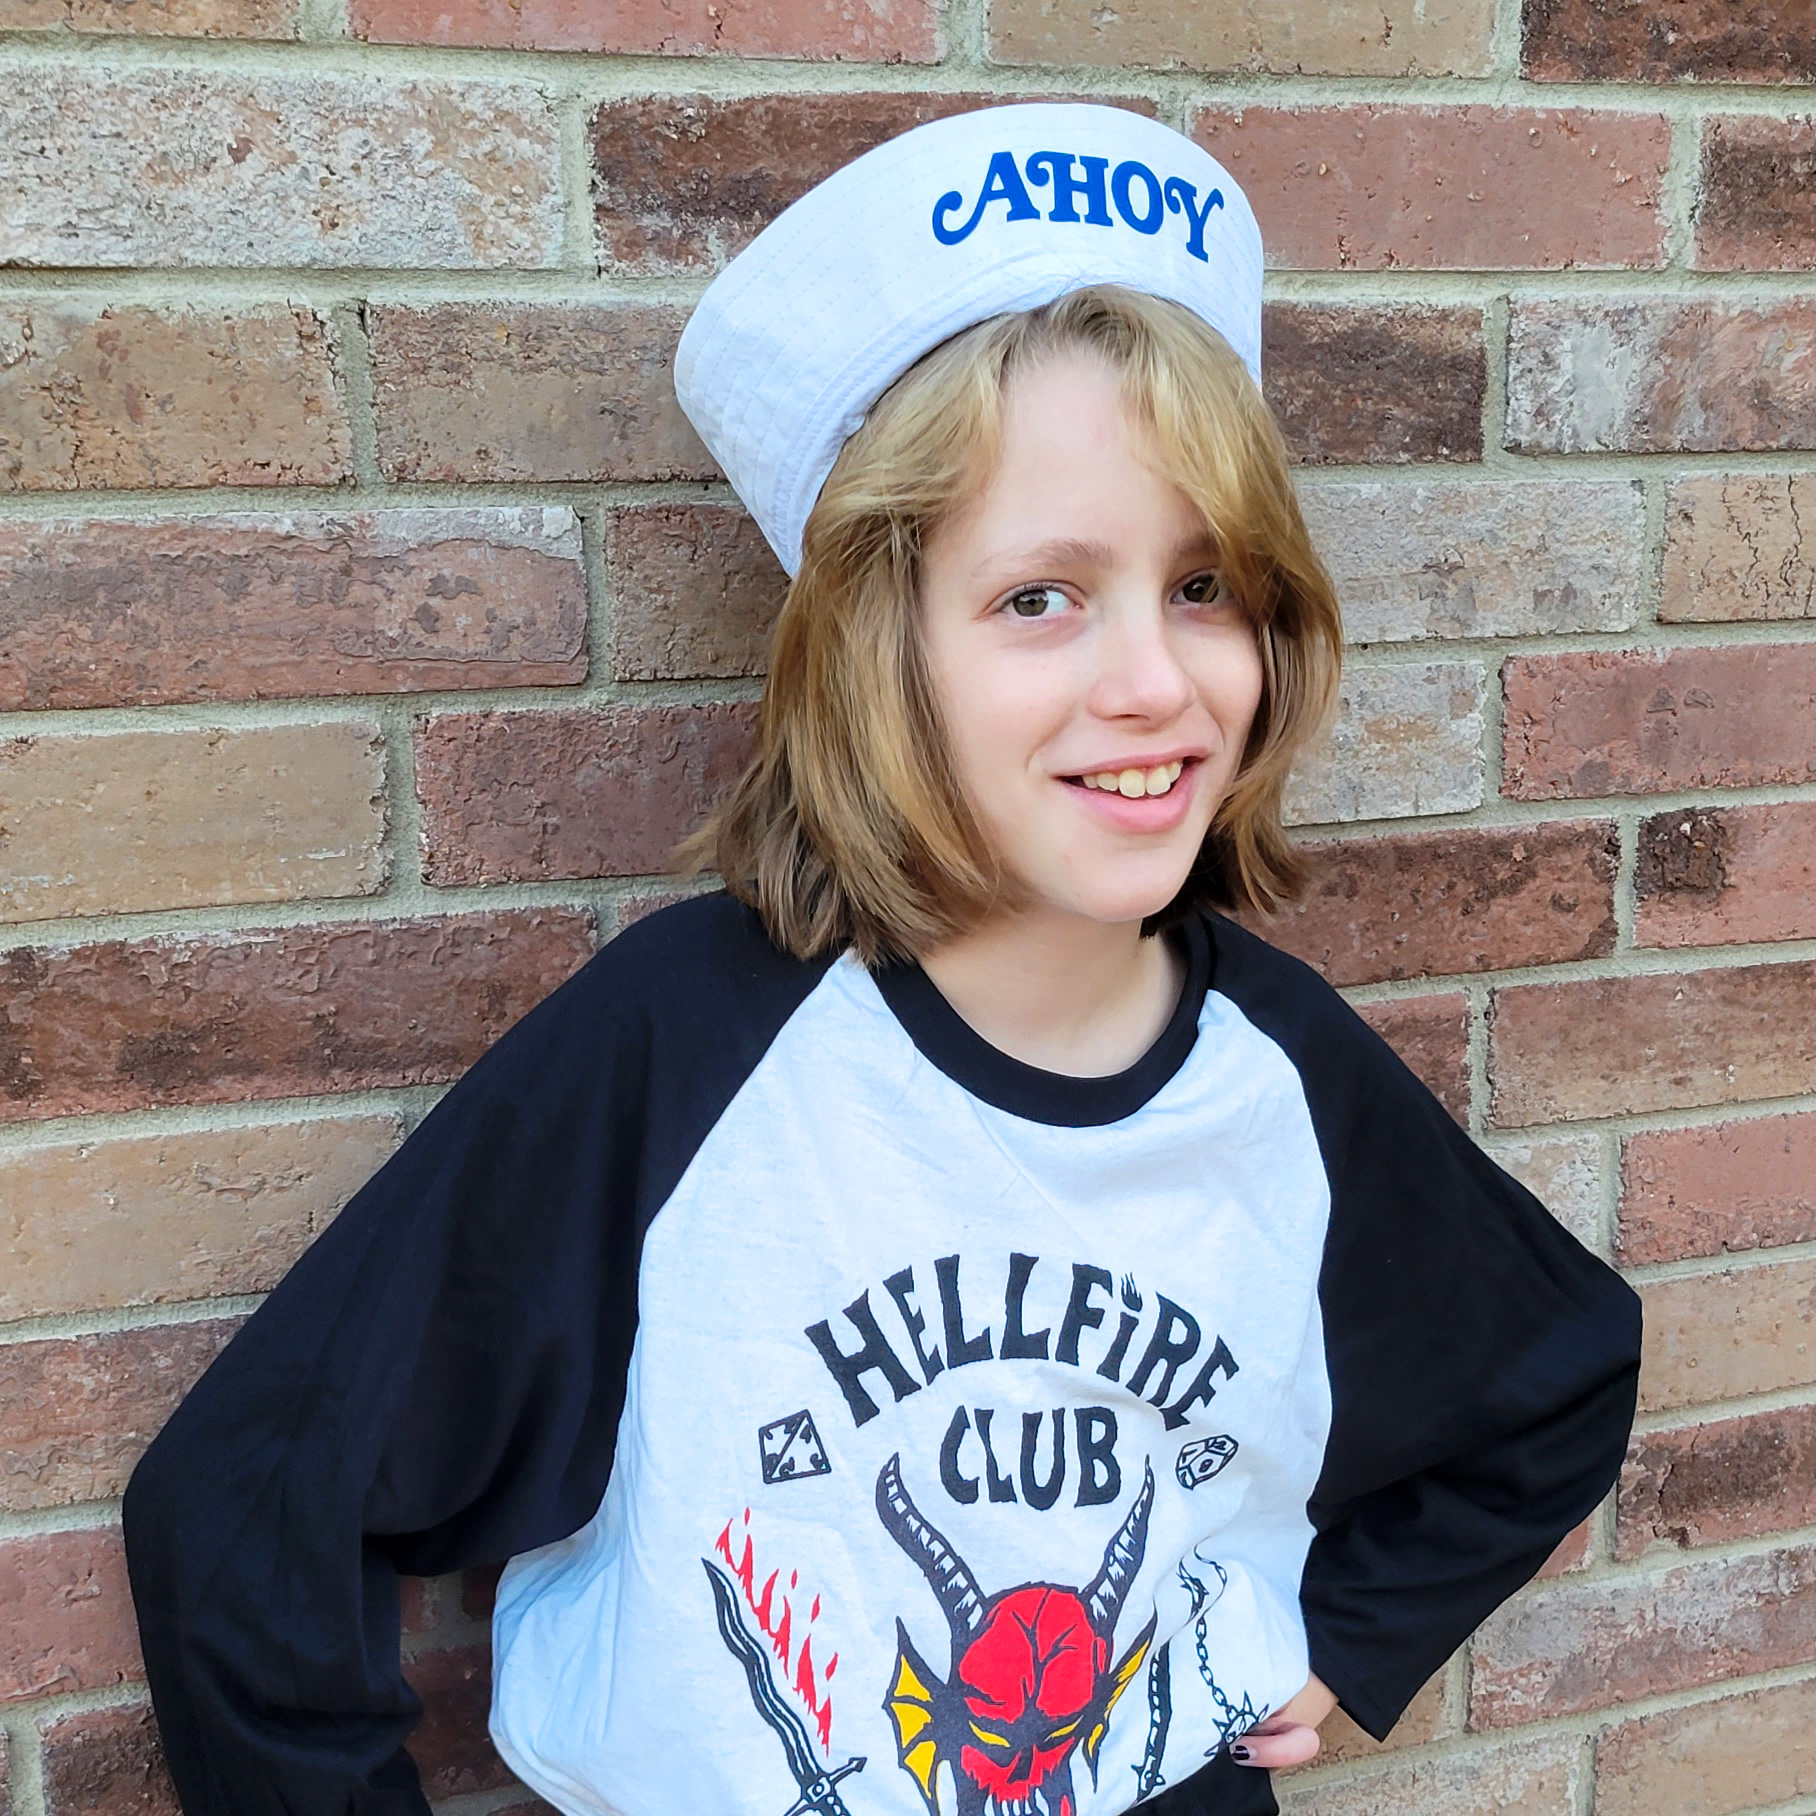 Ahoy Sailor Hat by Wilde Designs